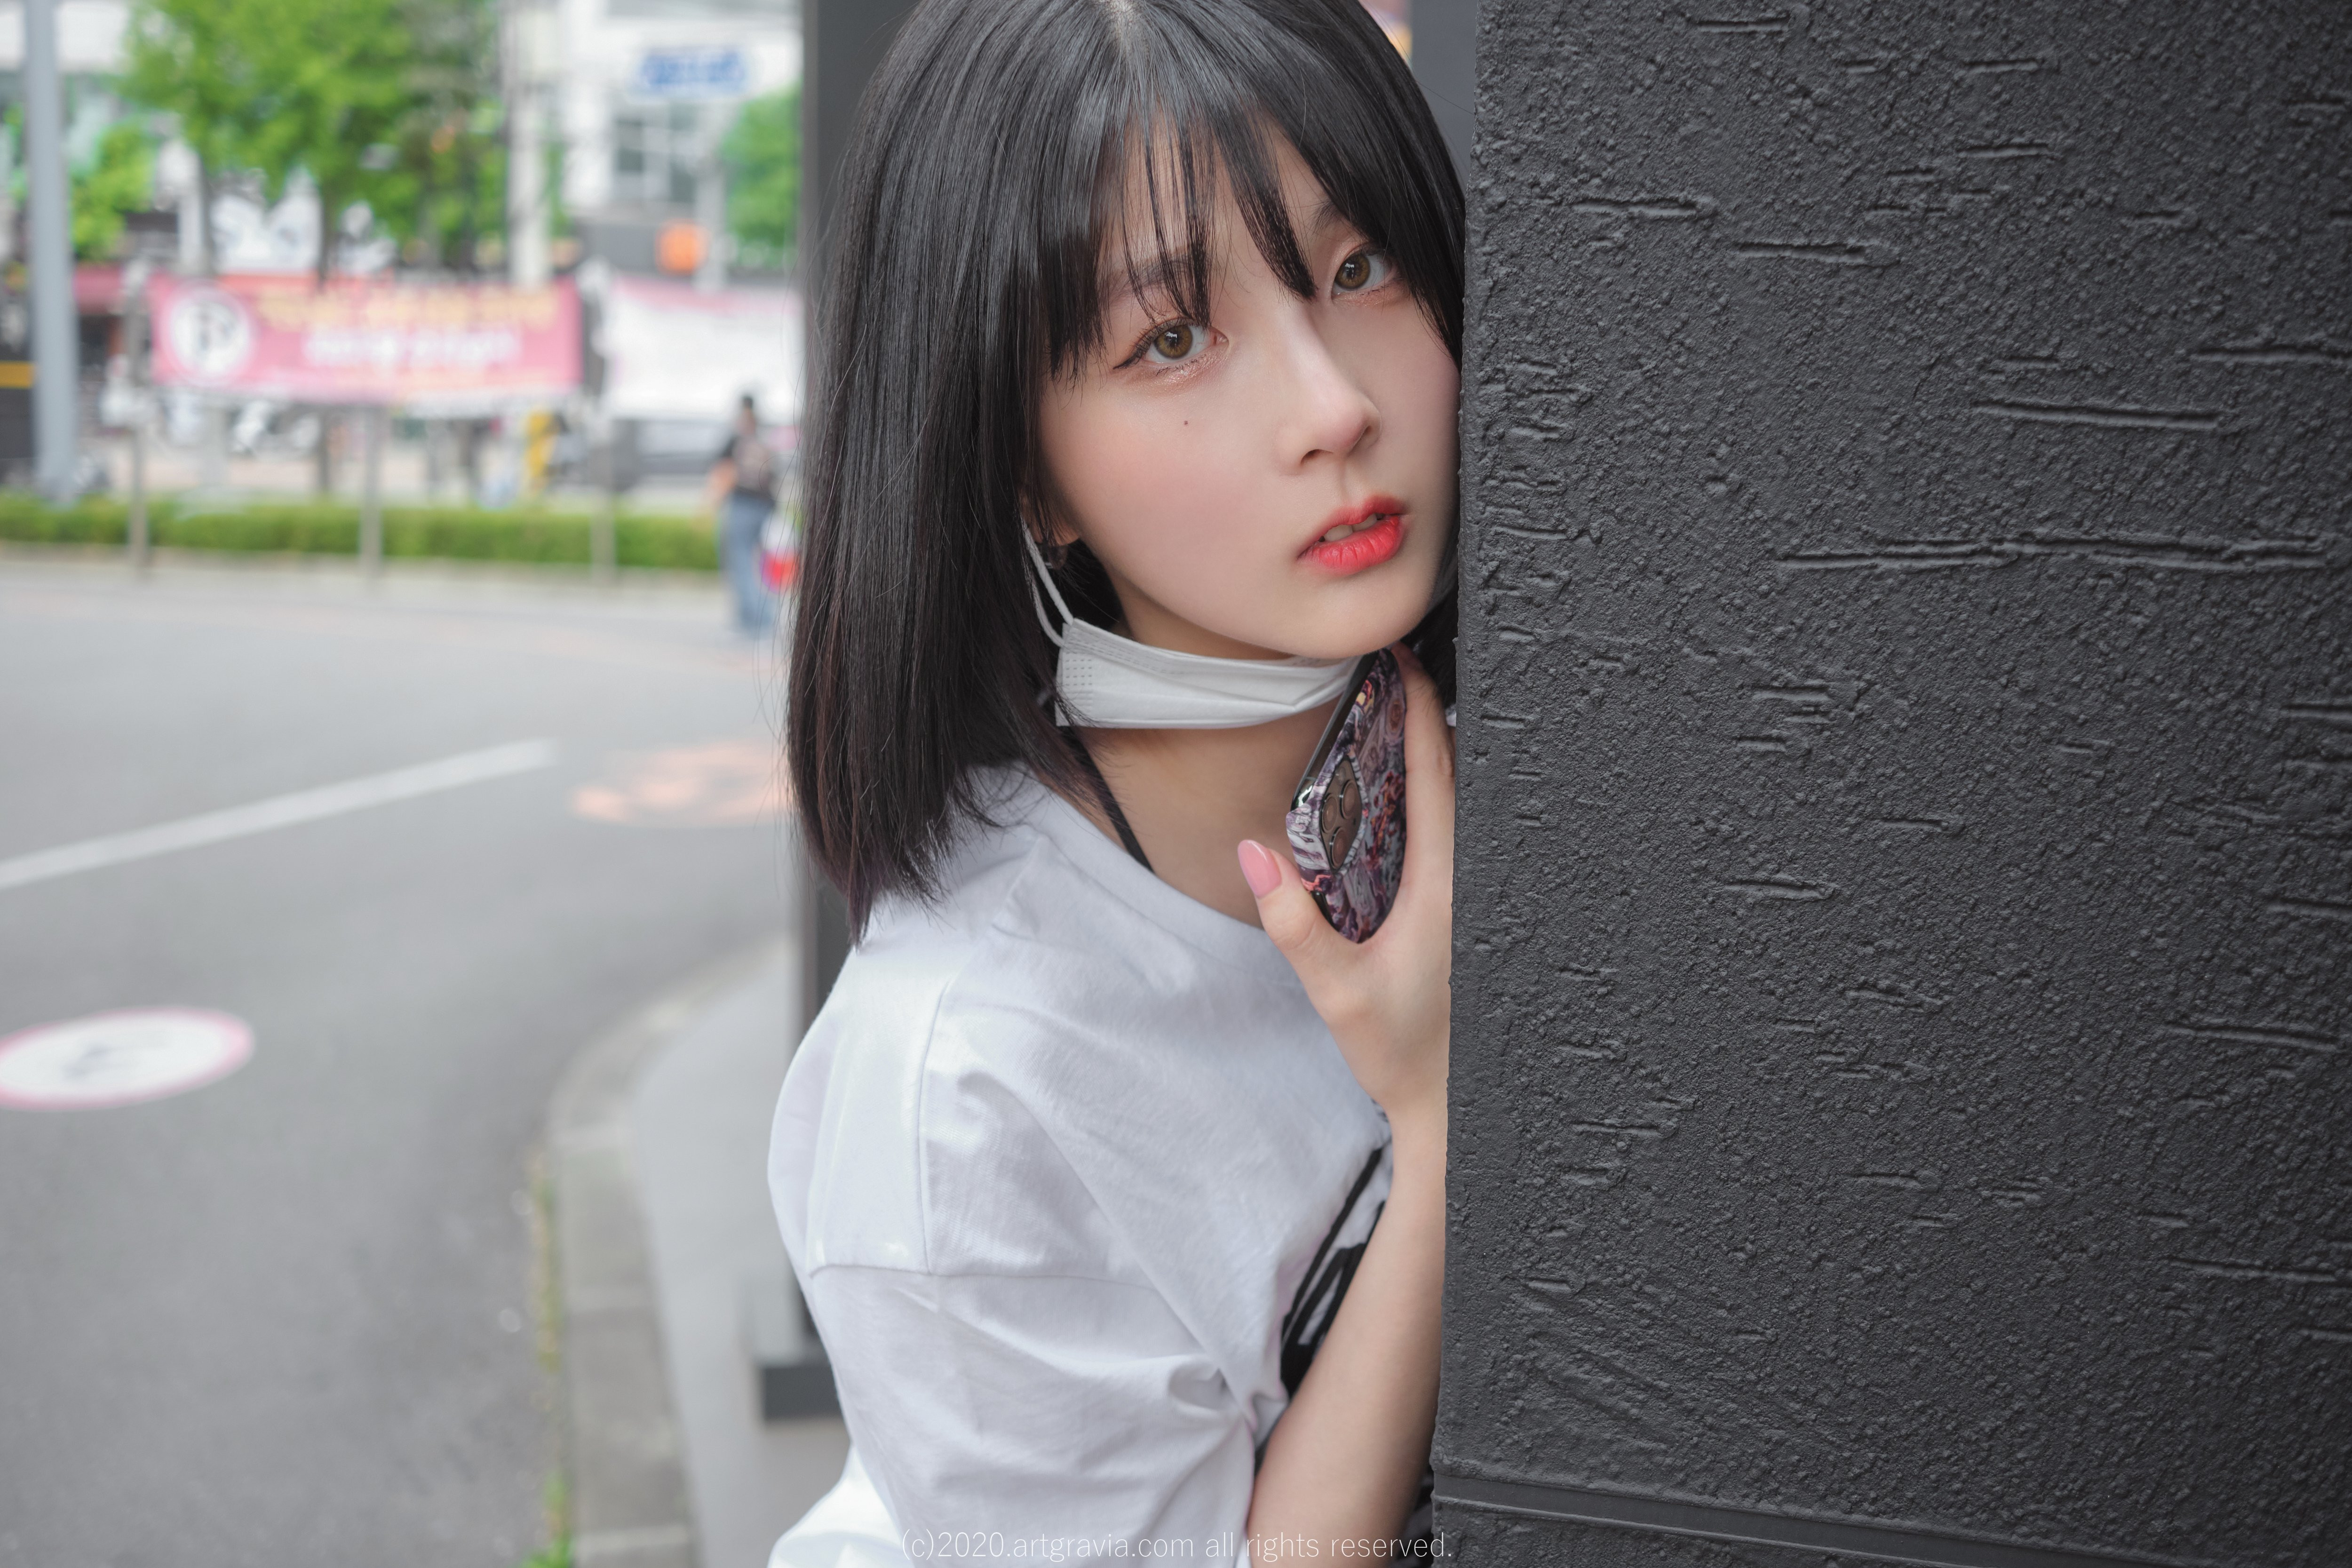 Korean Korean Women Short Pants Face Mask White T Shirt Black Hair Short Hair Looking At Viewer Asia 5000x3333